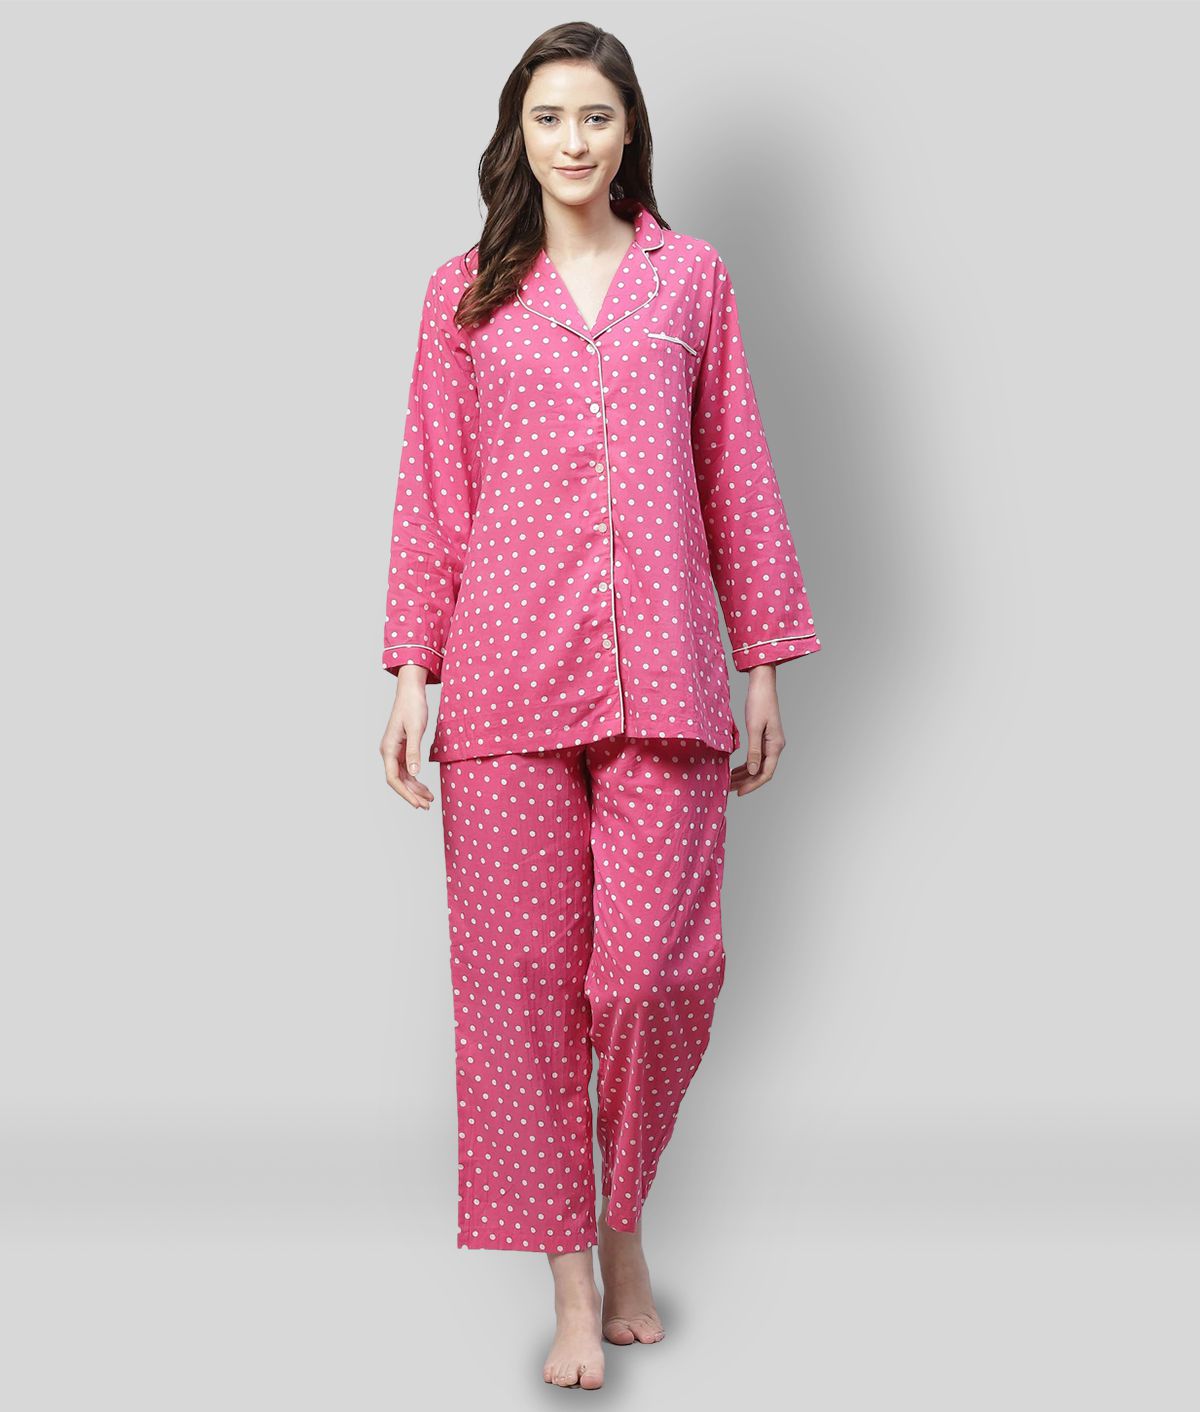     			Divena - Pink Cotton Women's Nightwear Nightsuit Sets ( Pack of 1 )